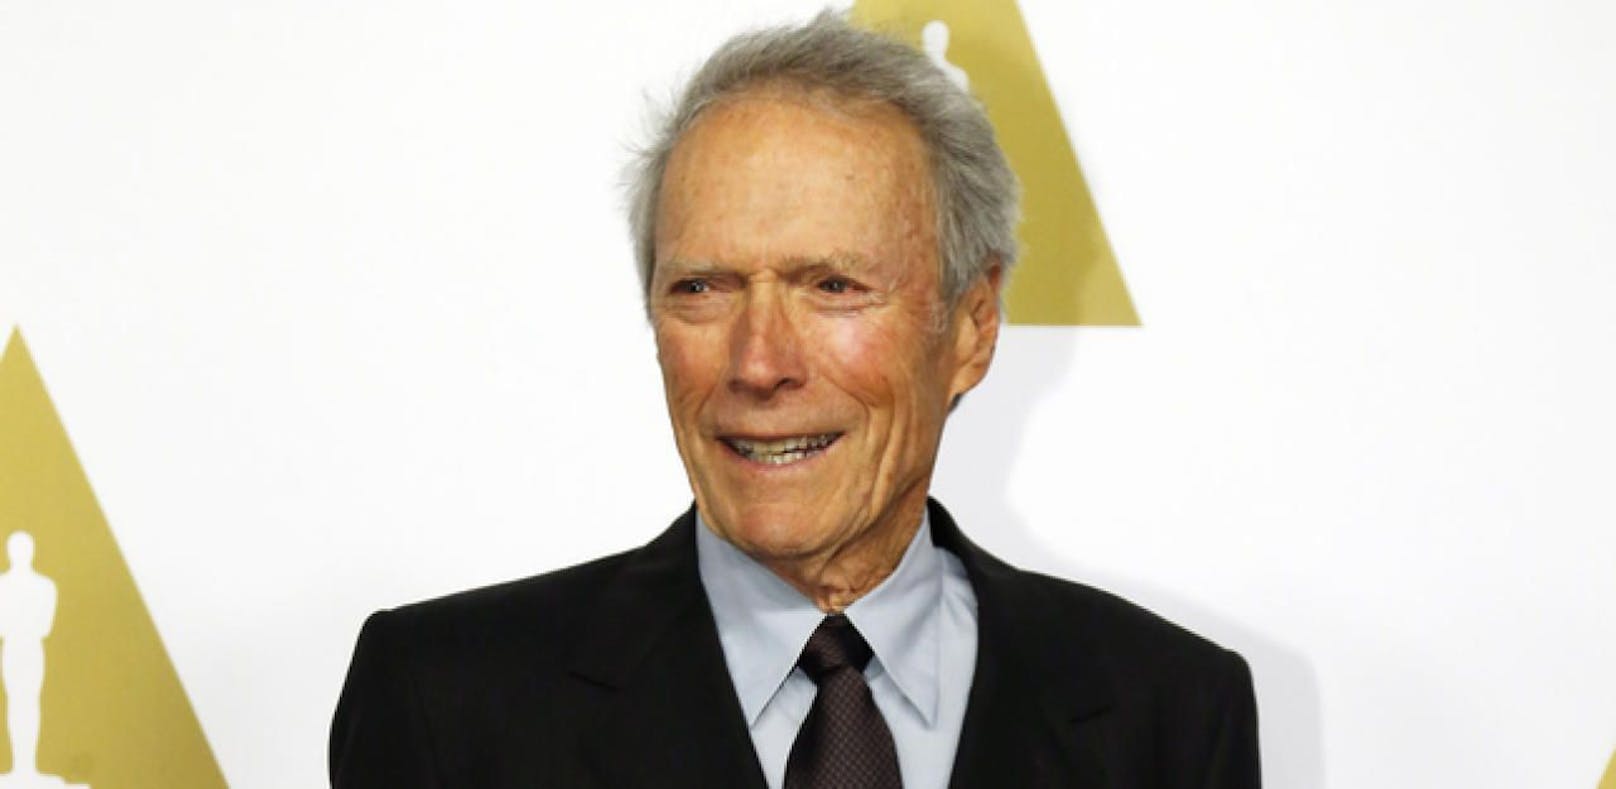 Clint Eastwood fährt auch im hohen Alter noch Ski